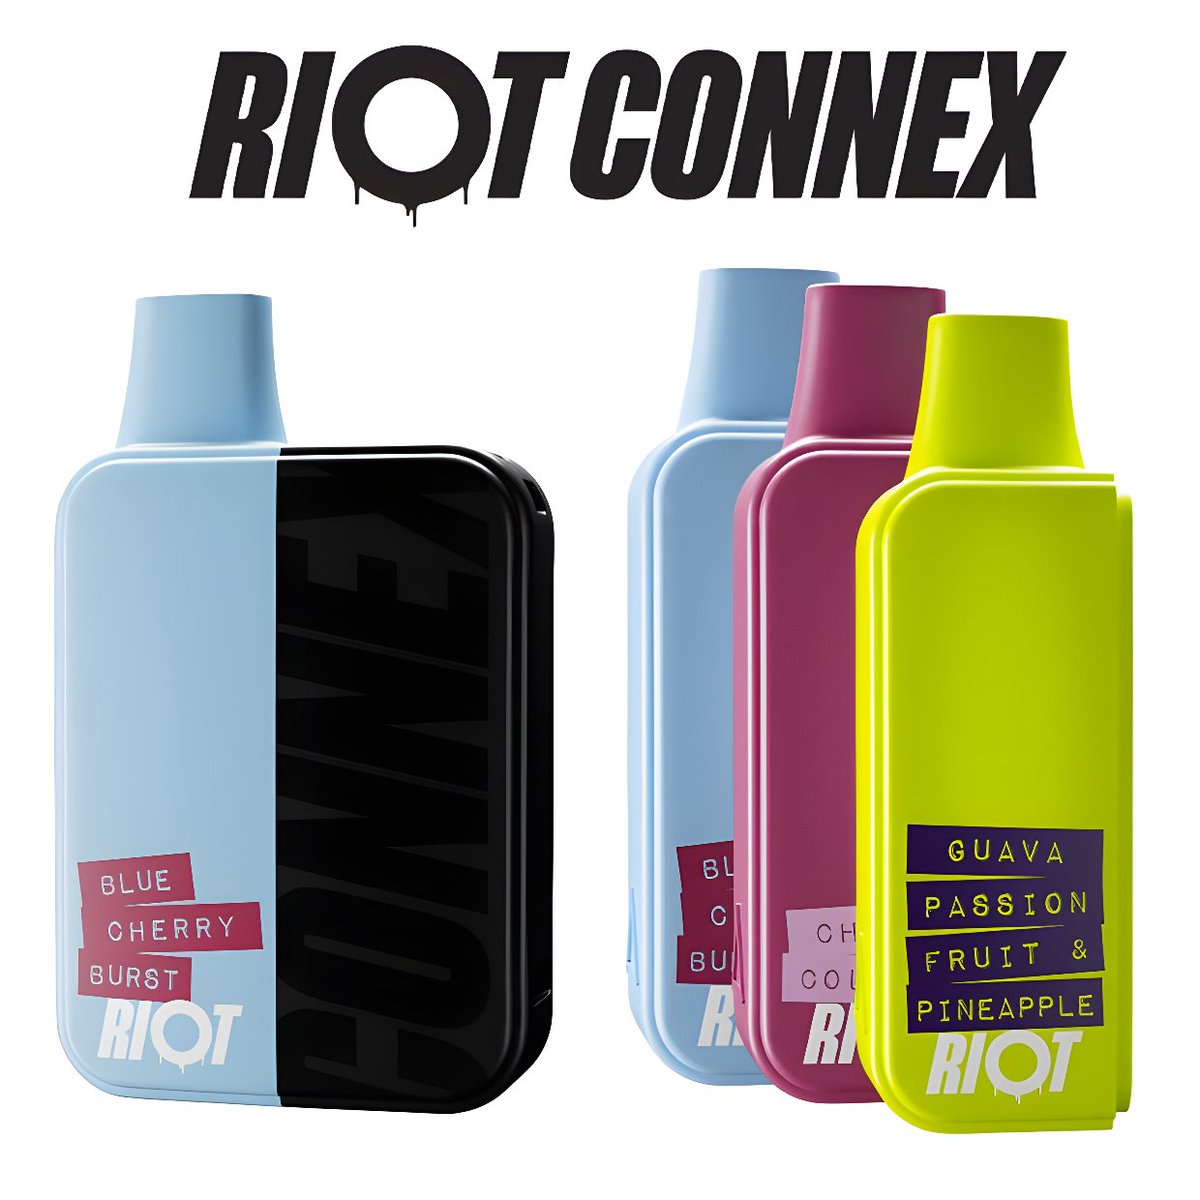 Riot Connex Pod Kit (1 battery + 2 capsules)
Single capsules are available to buy separately
vapestreams.co.uk/product-catego…

#vaping #eliquid #vapecommunity #puffbar #vapebar #vapelife #cloudchaser #vapefam #clouds #ecig #ukvapers #ukvapedeals #vapestreamsuk #Riotconnex #Rioteliquid